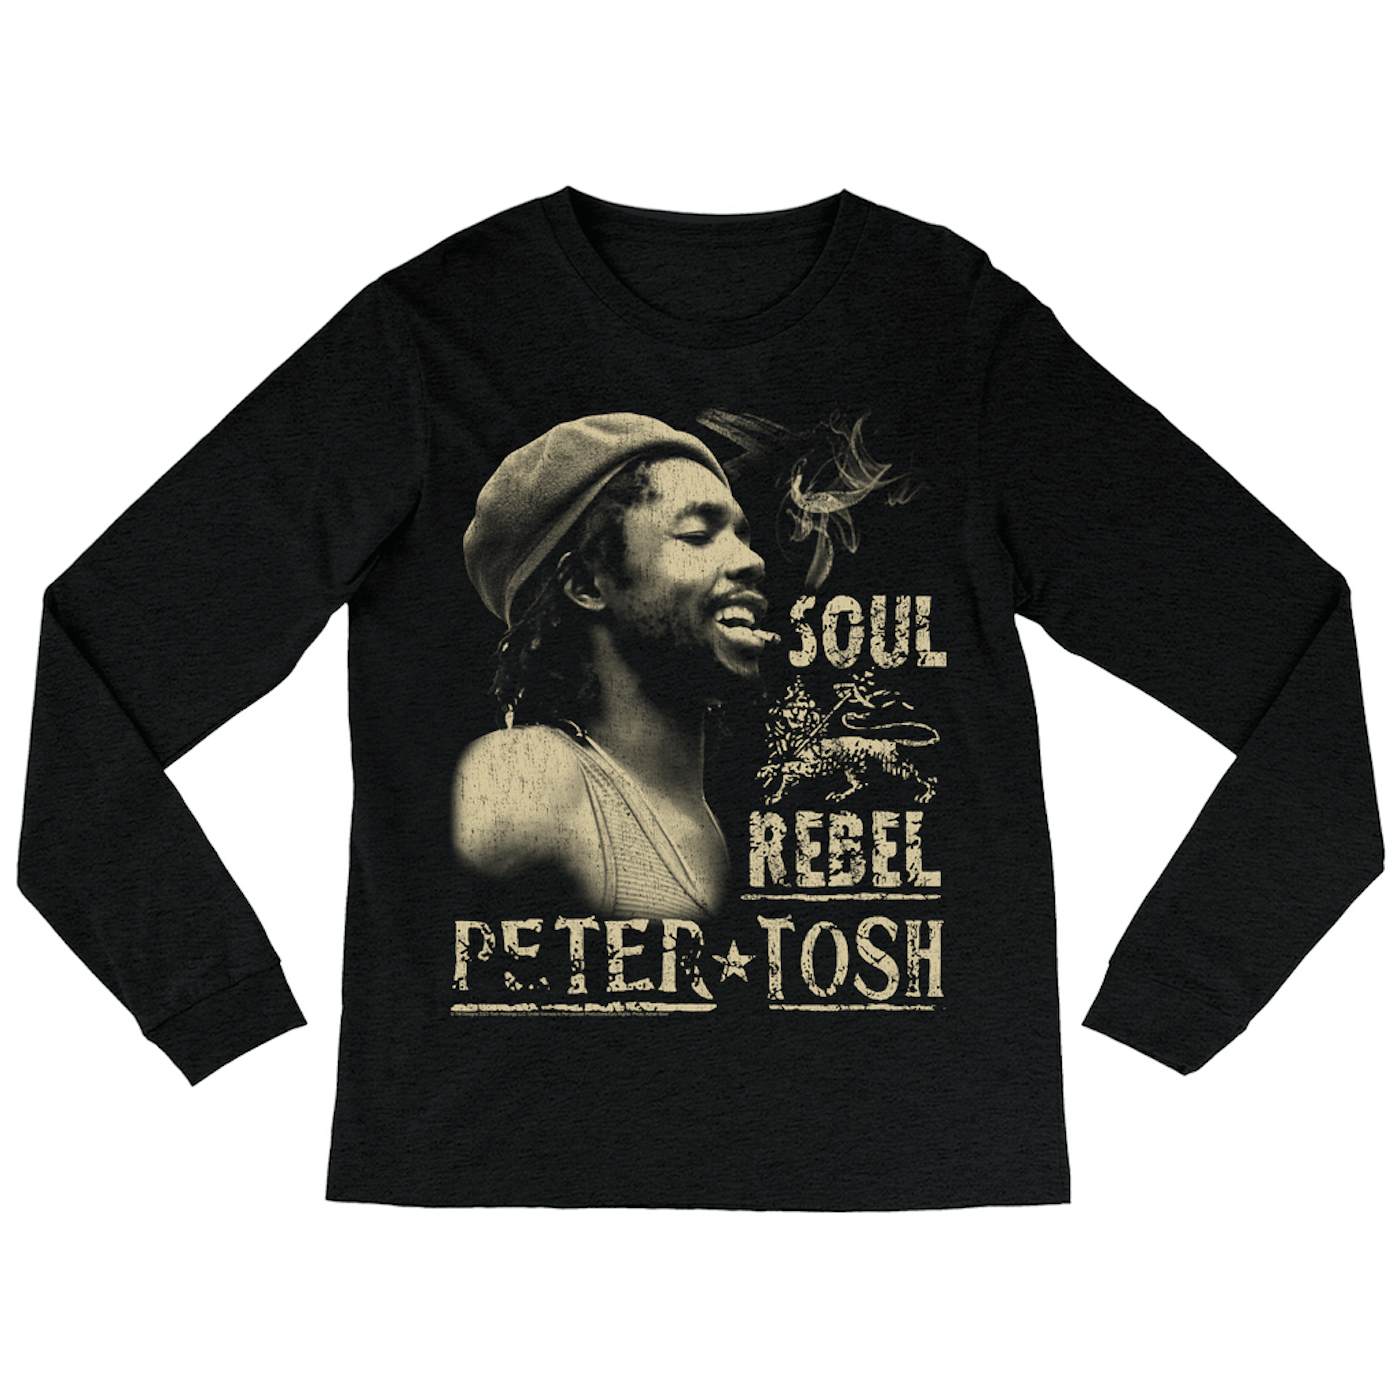 Peter Tosh Long Sleeve Shirt | Soul Rebel Peter Tosh Shirt